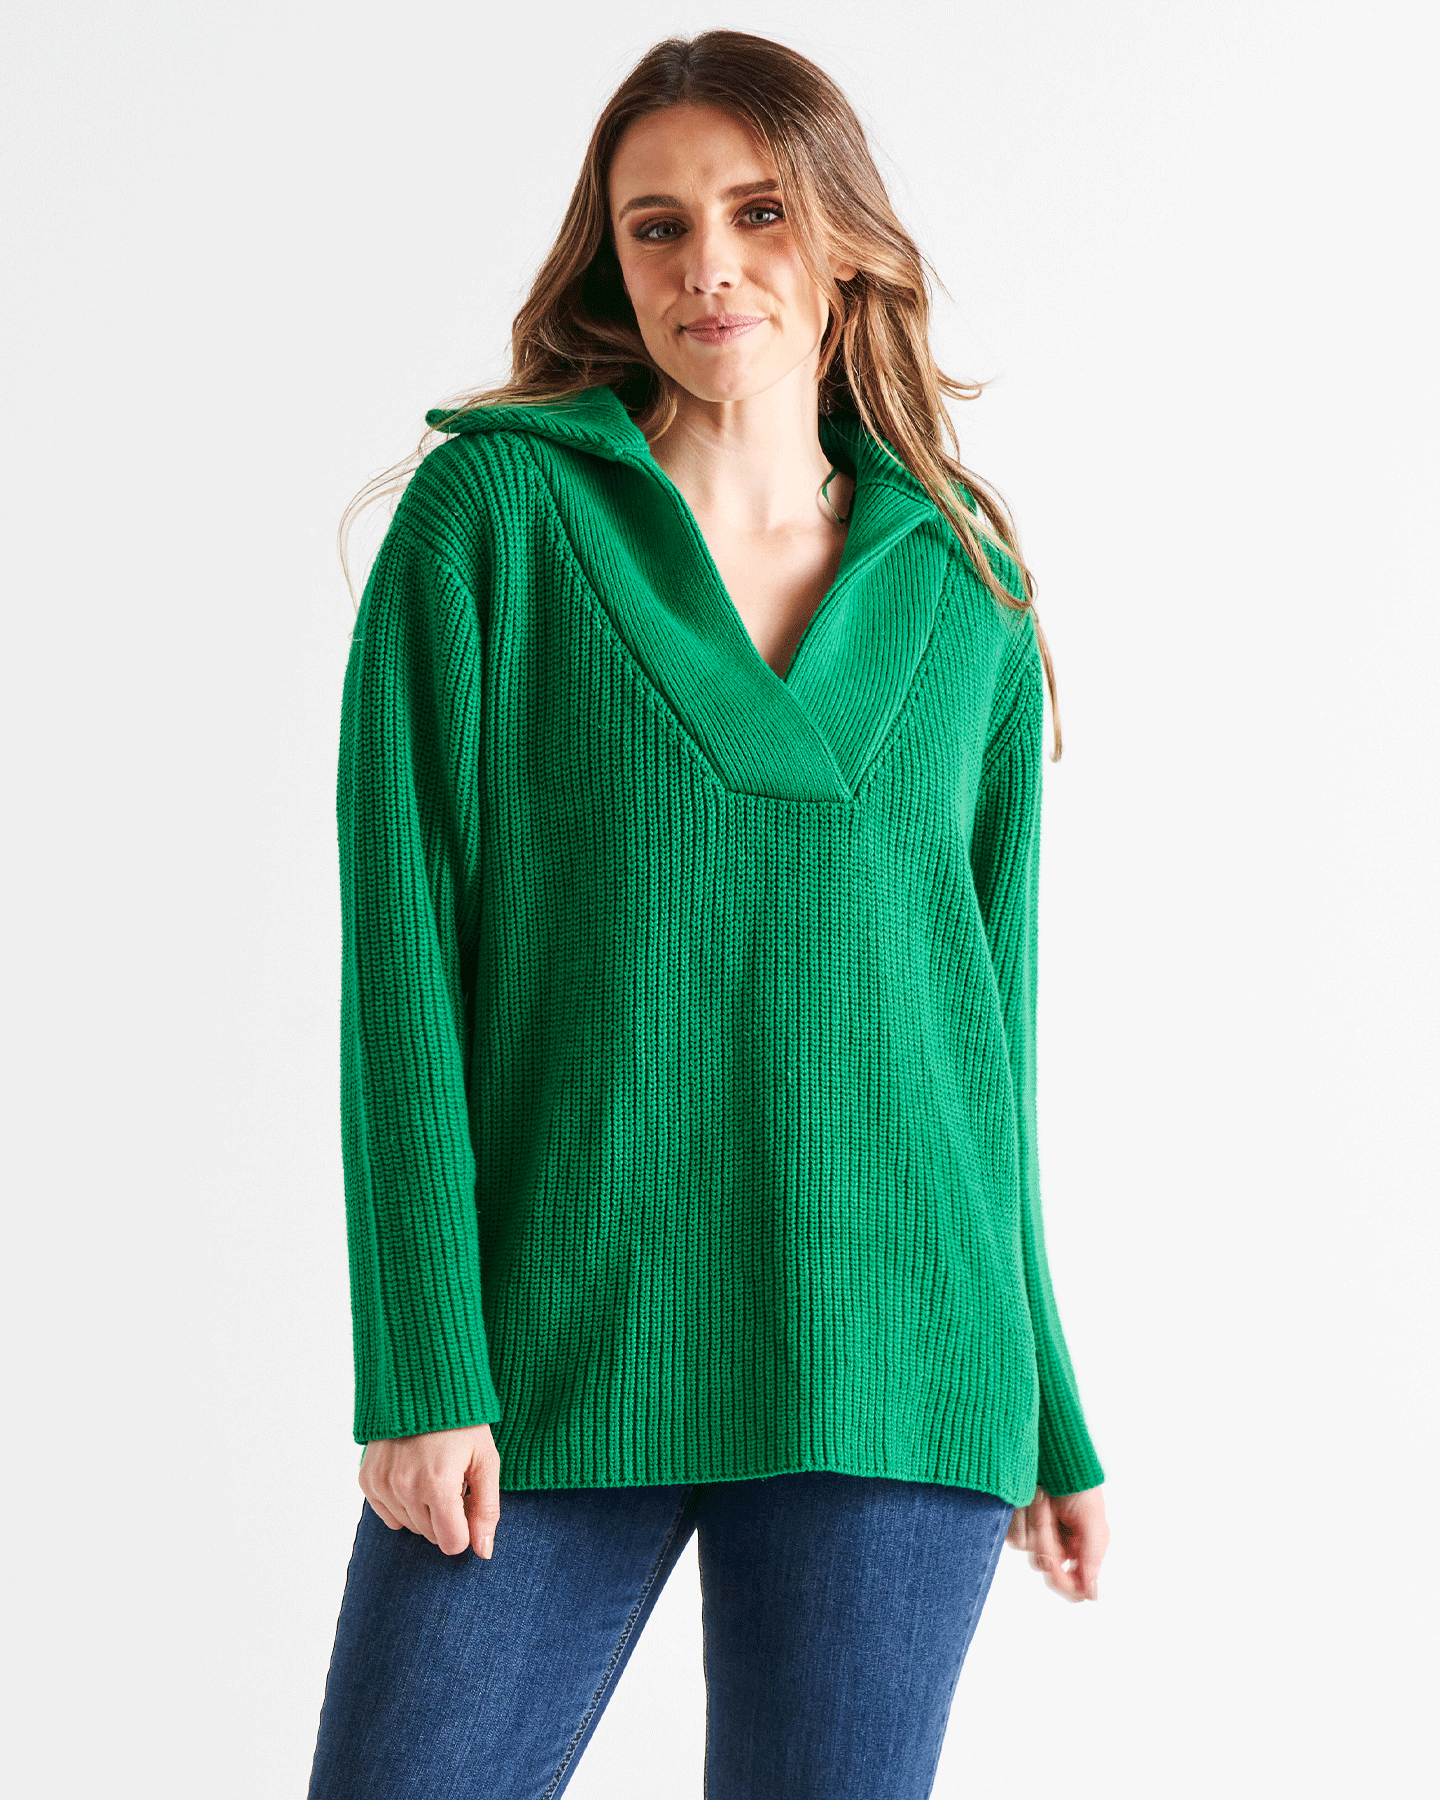 Bordeaux Collar Knit - Emerald Green